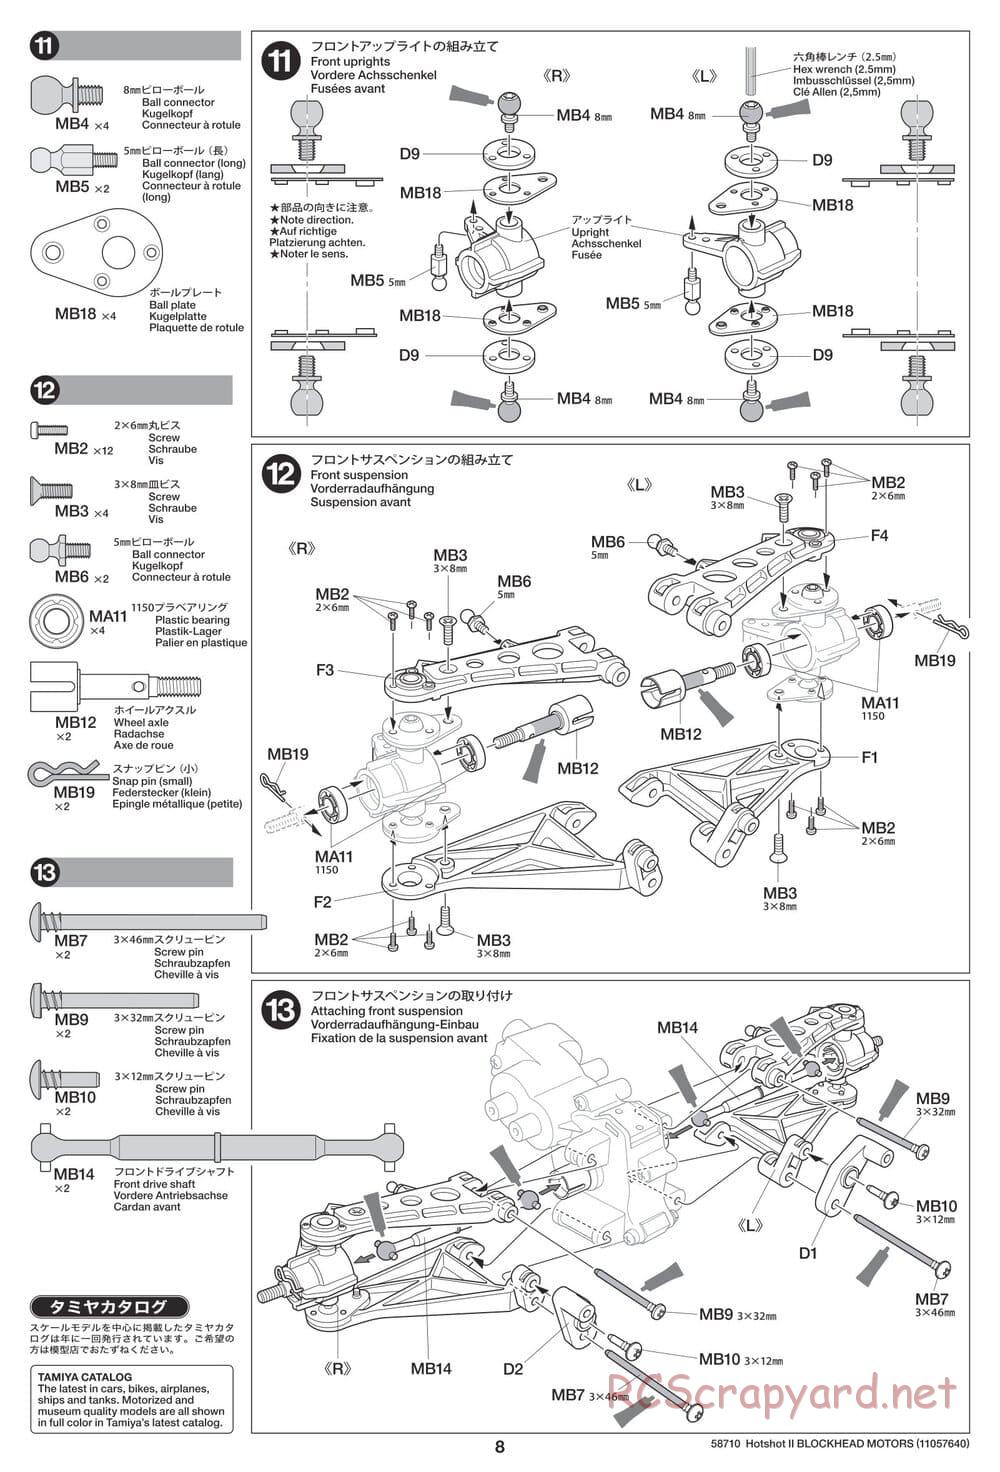 Tamiya - Hotshot II Blockhead Motors - HS Chassis - Manual - Page 8